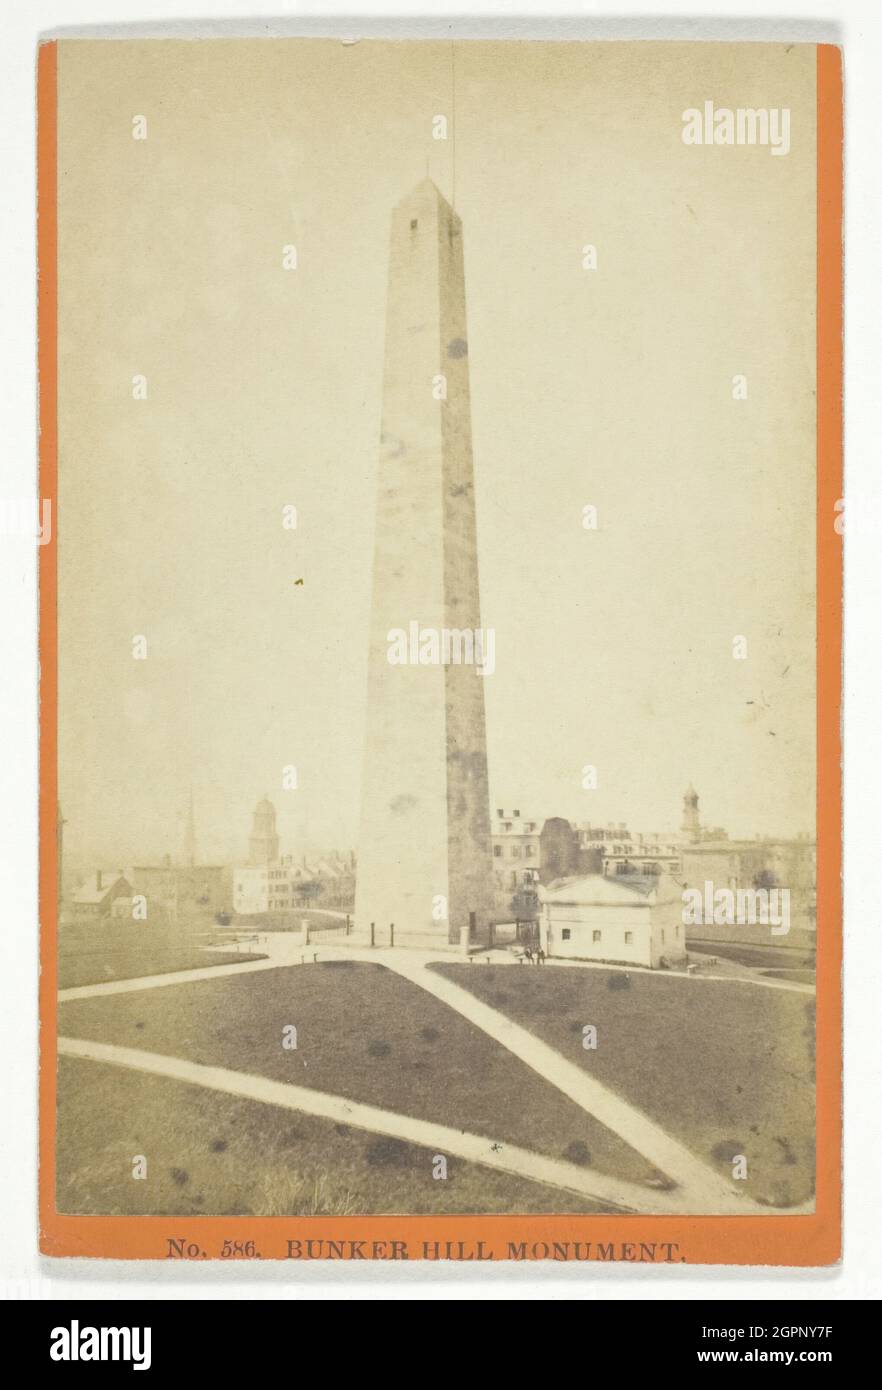 Bunker Hill Monument, 1845/1900. [War memorial at Charlestown, Massachusetts, comemmorating the Battle of Bunker Hill during the American Revolutionary War]. Albumen print (carte-de-visite). Stock Photo